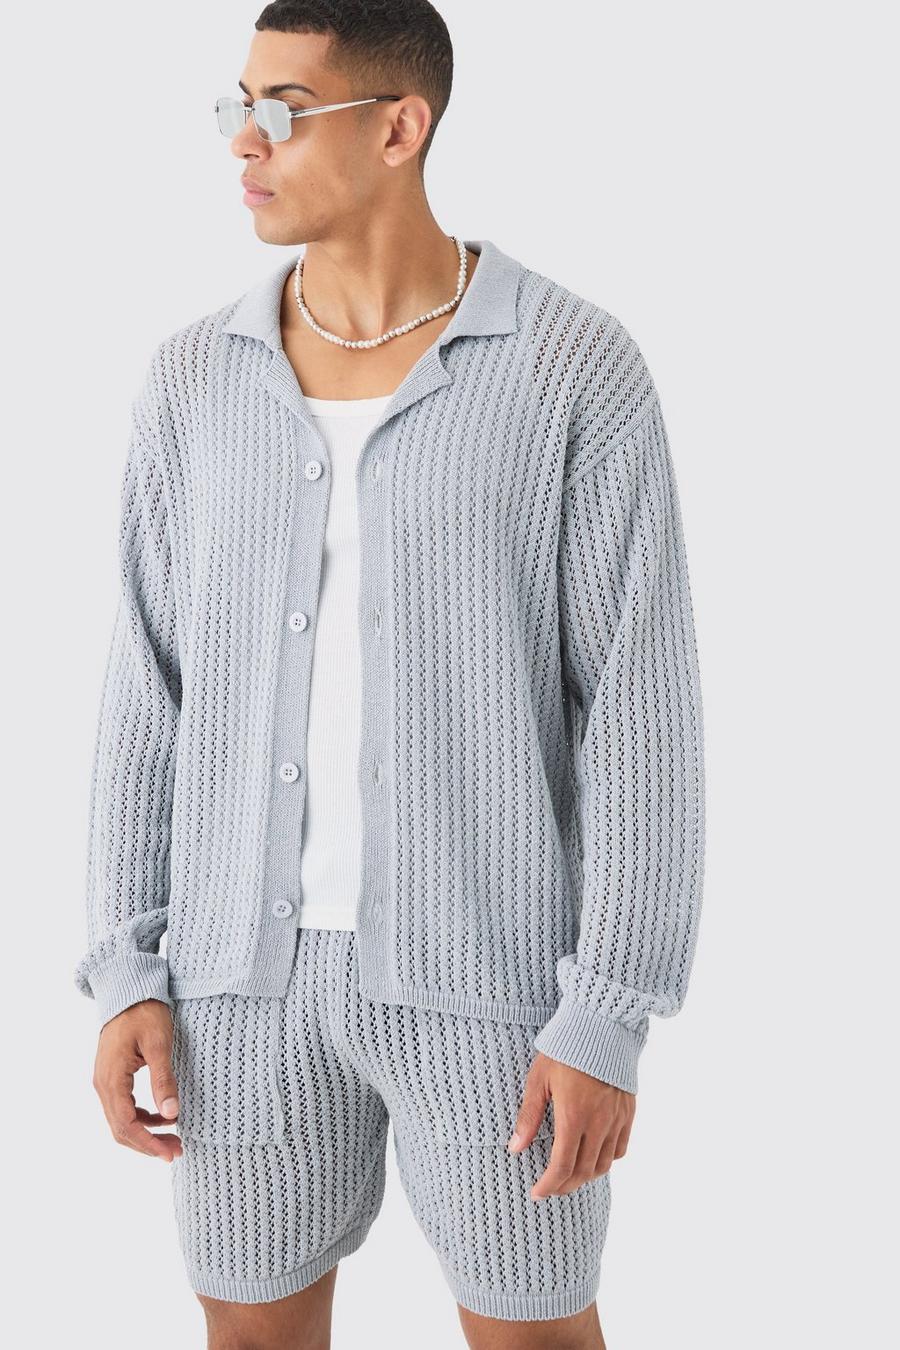 Relaxed Crochet Open Knit Long Sleeve Shirt In Grey